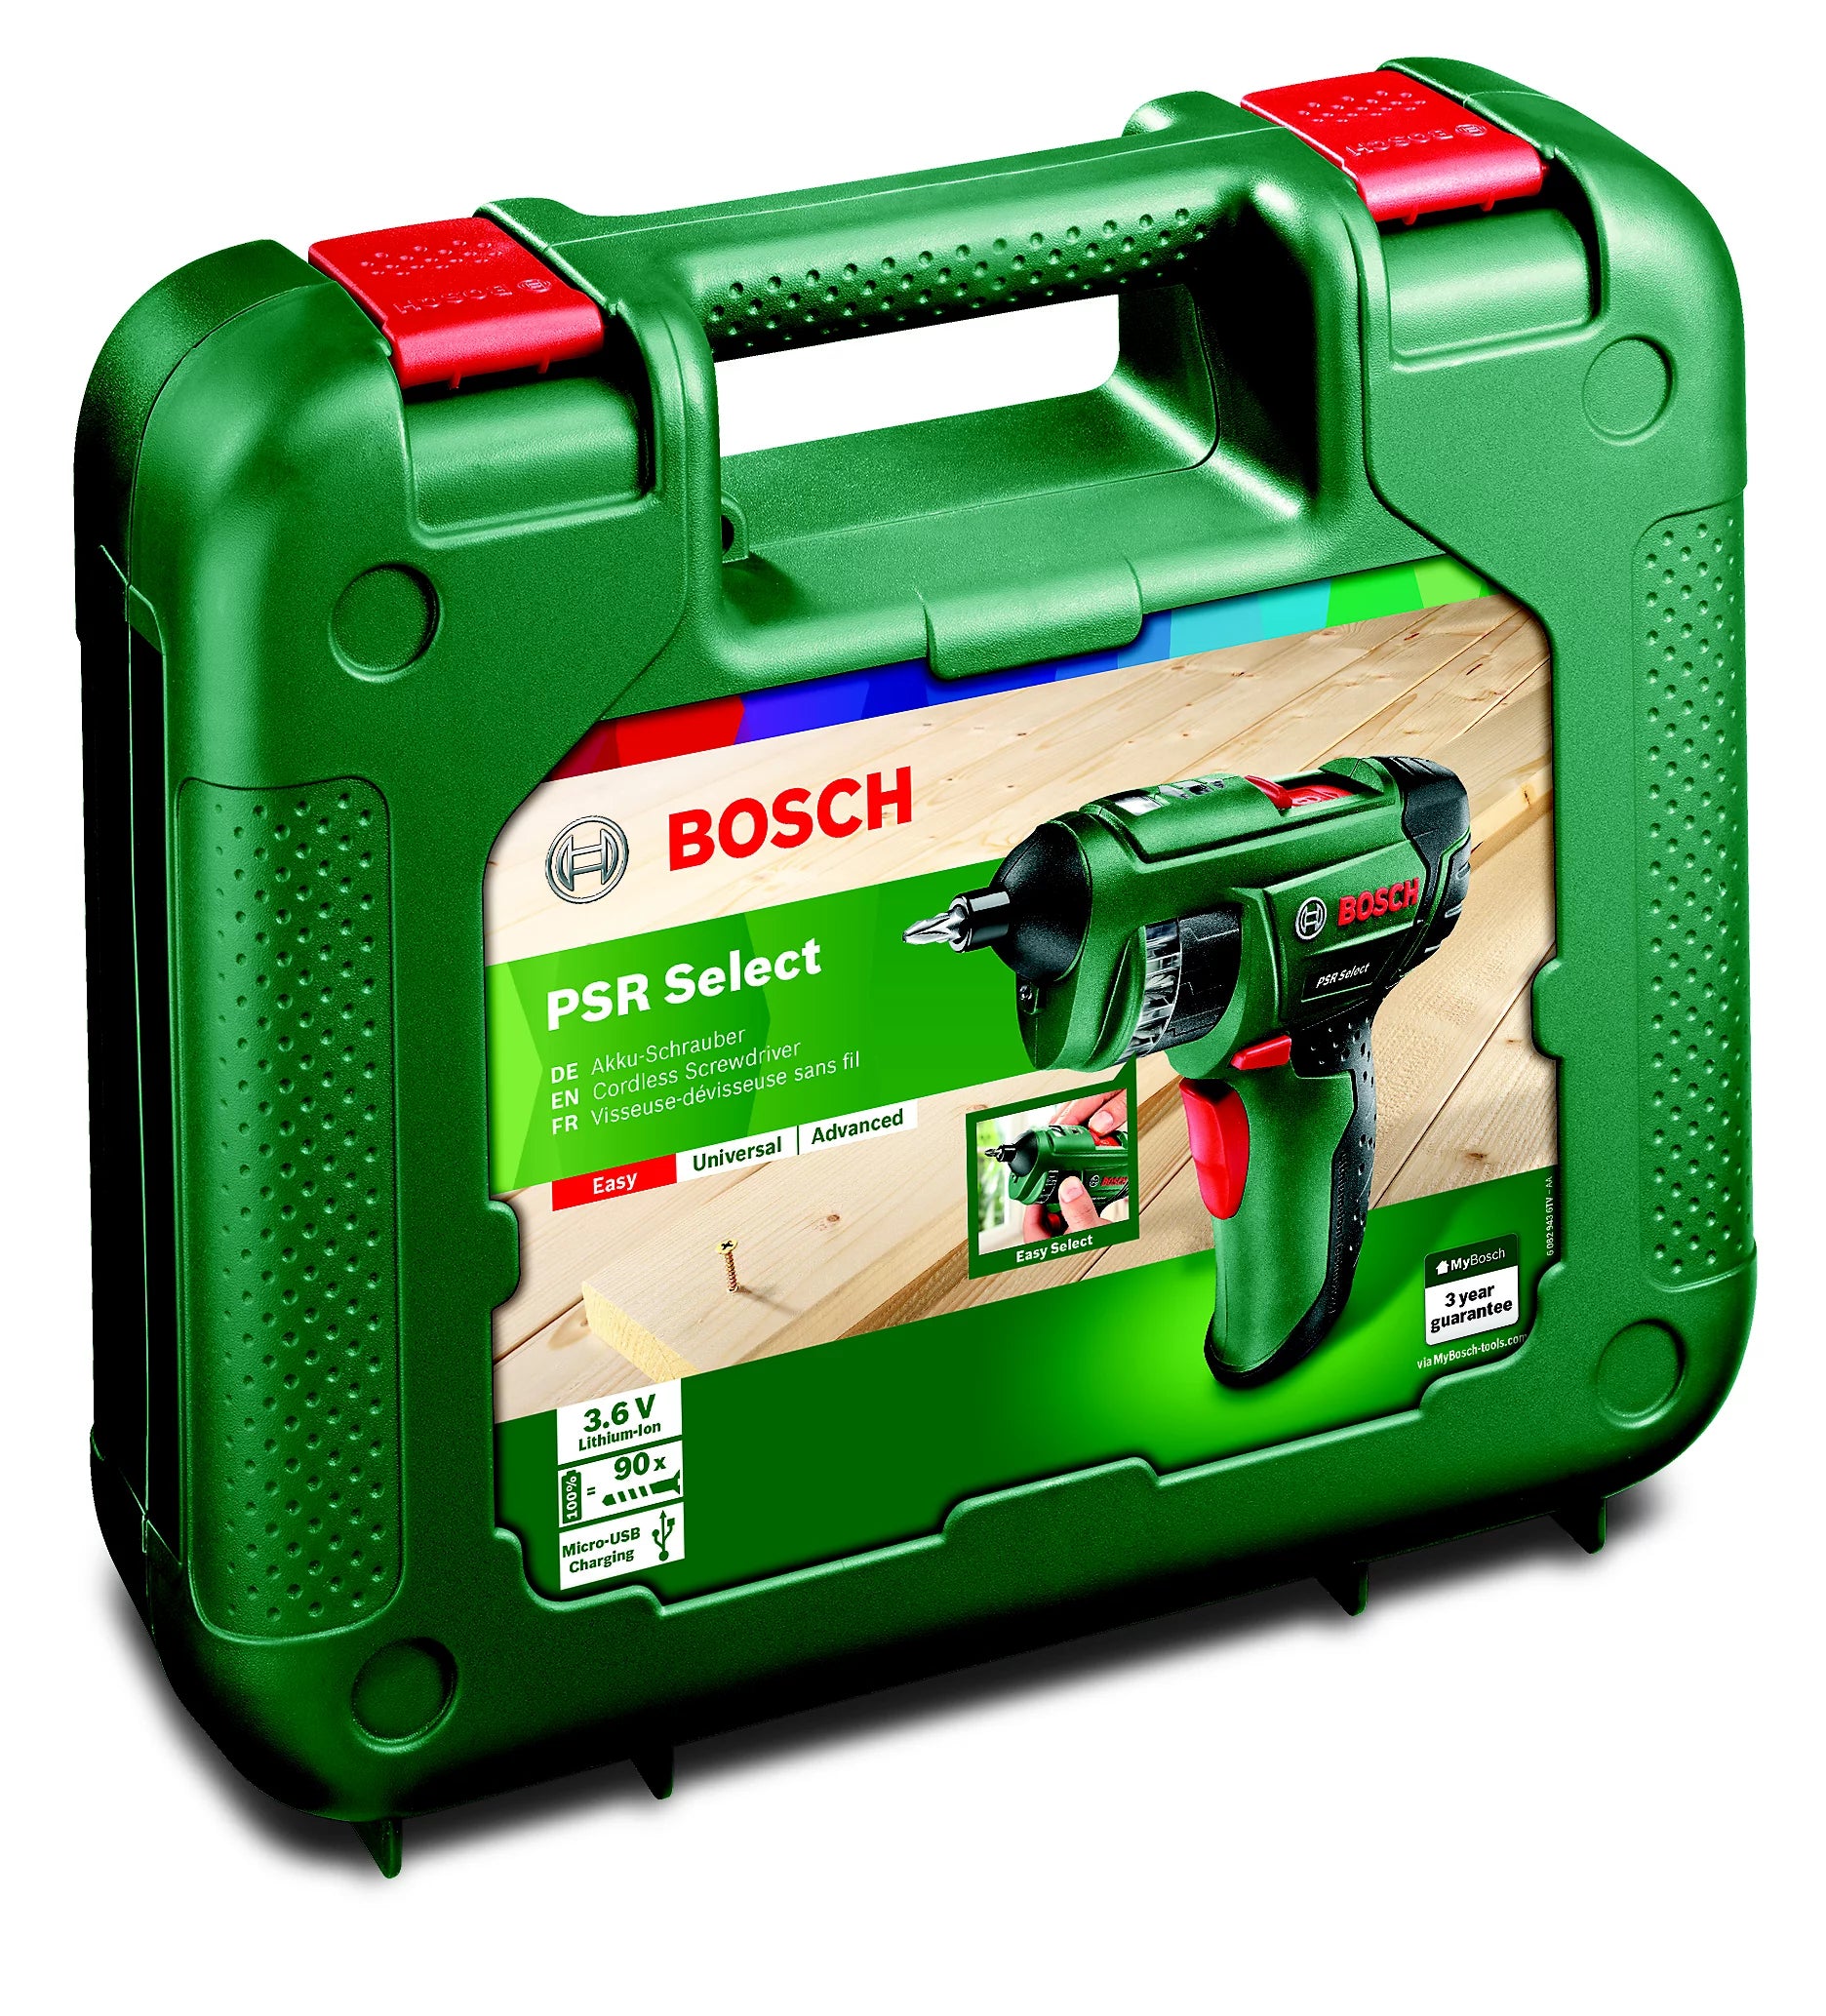 Bosch PSR Select 3.6V 1.5 Li-ion Cordless Screwdriver 7262D